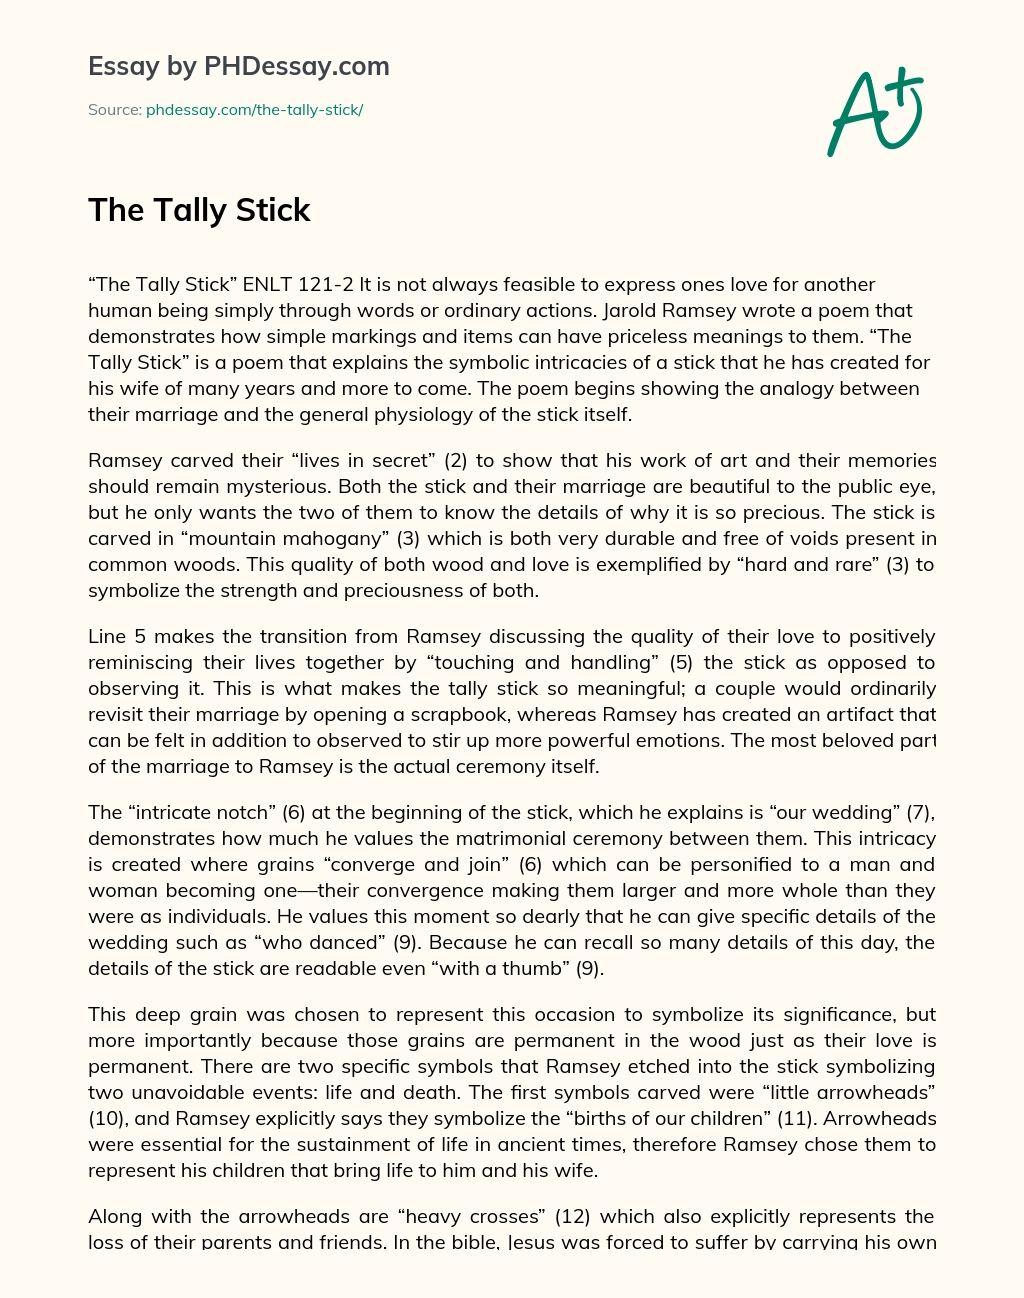 The Tally Stick essay